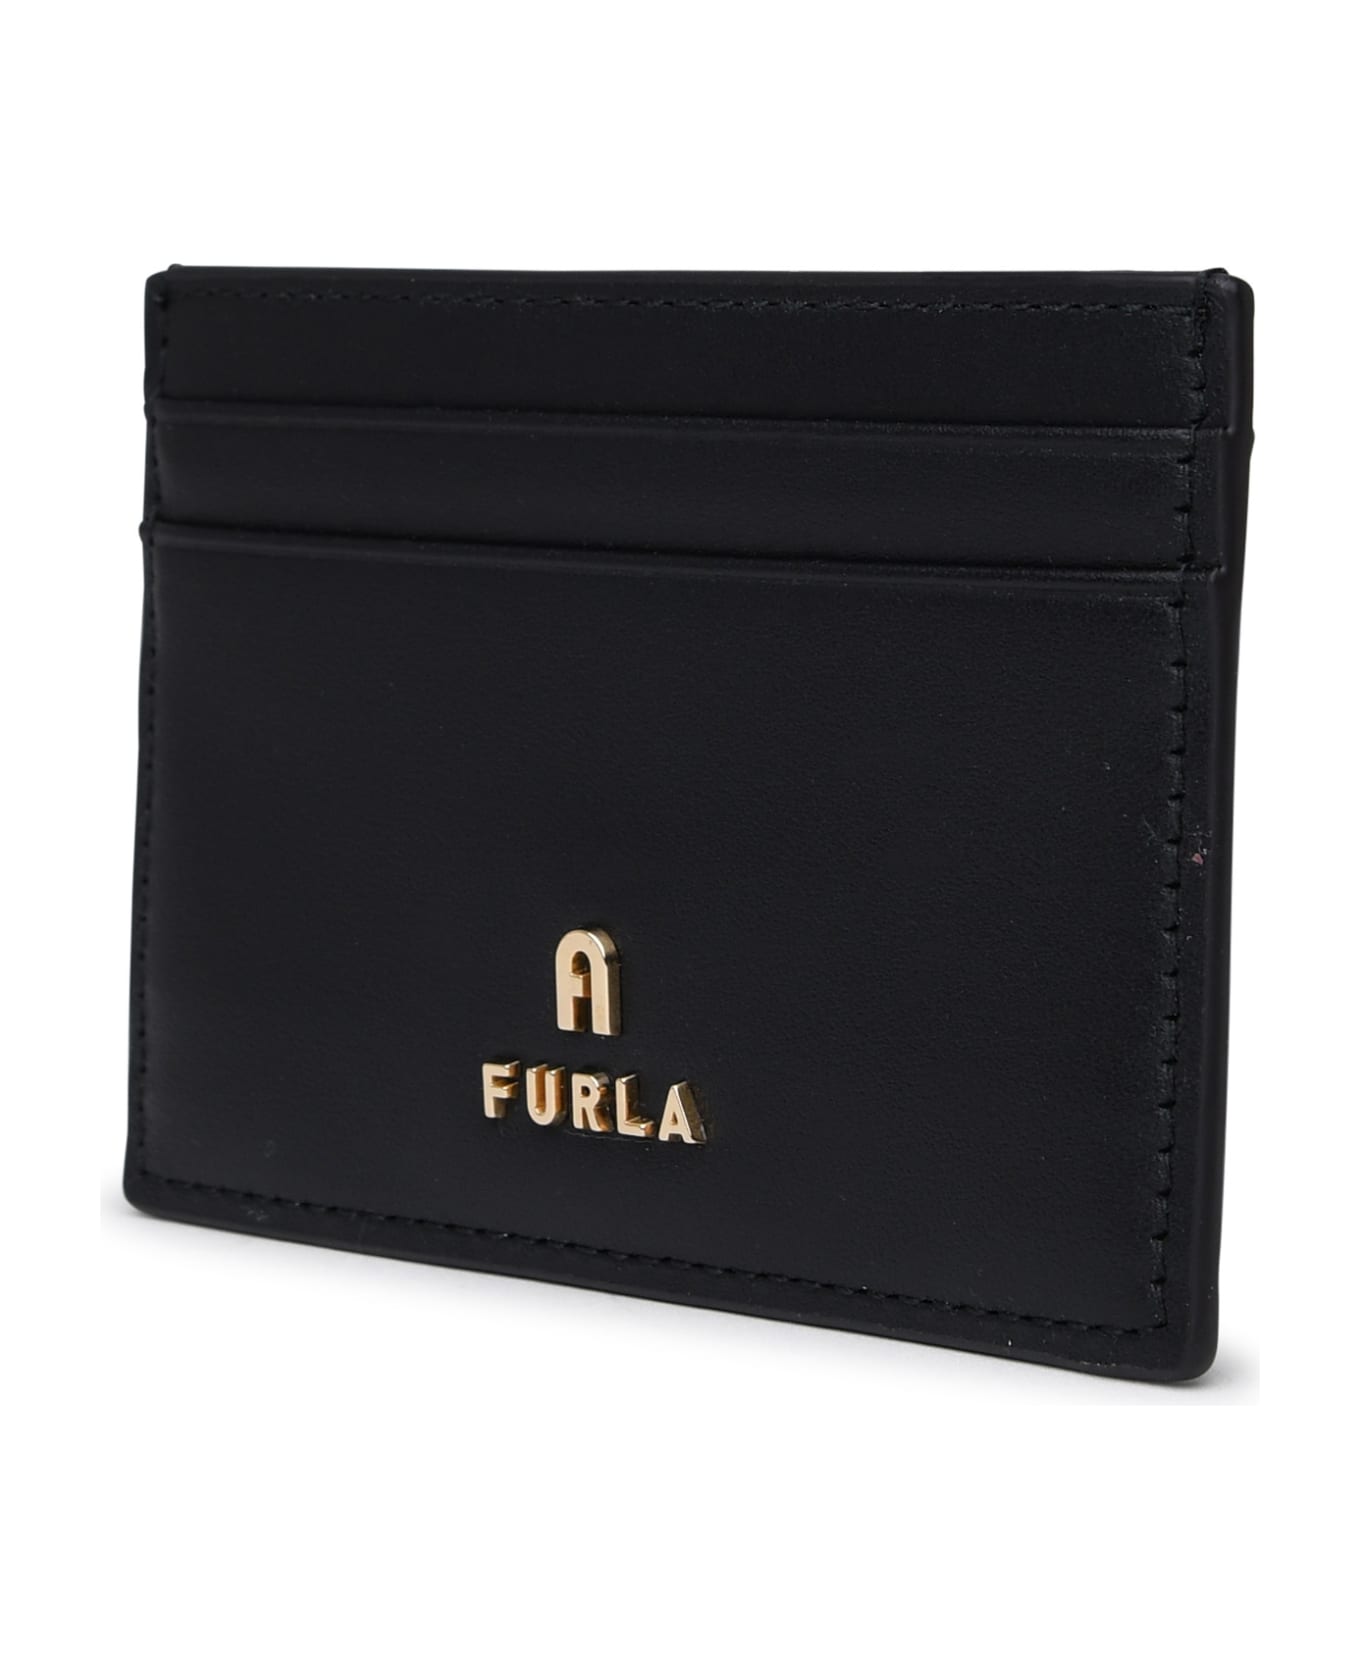 Furla Black Leather Camelia Card Holder - Black